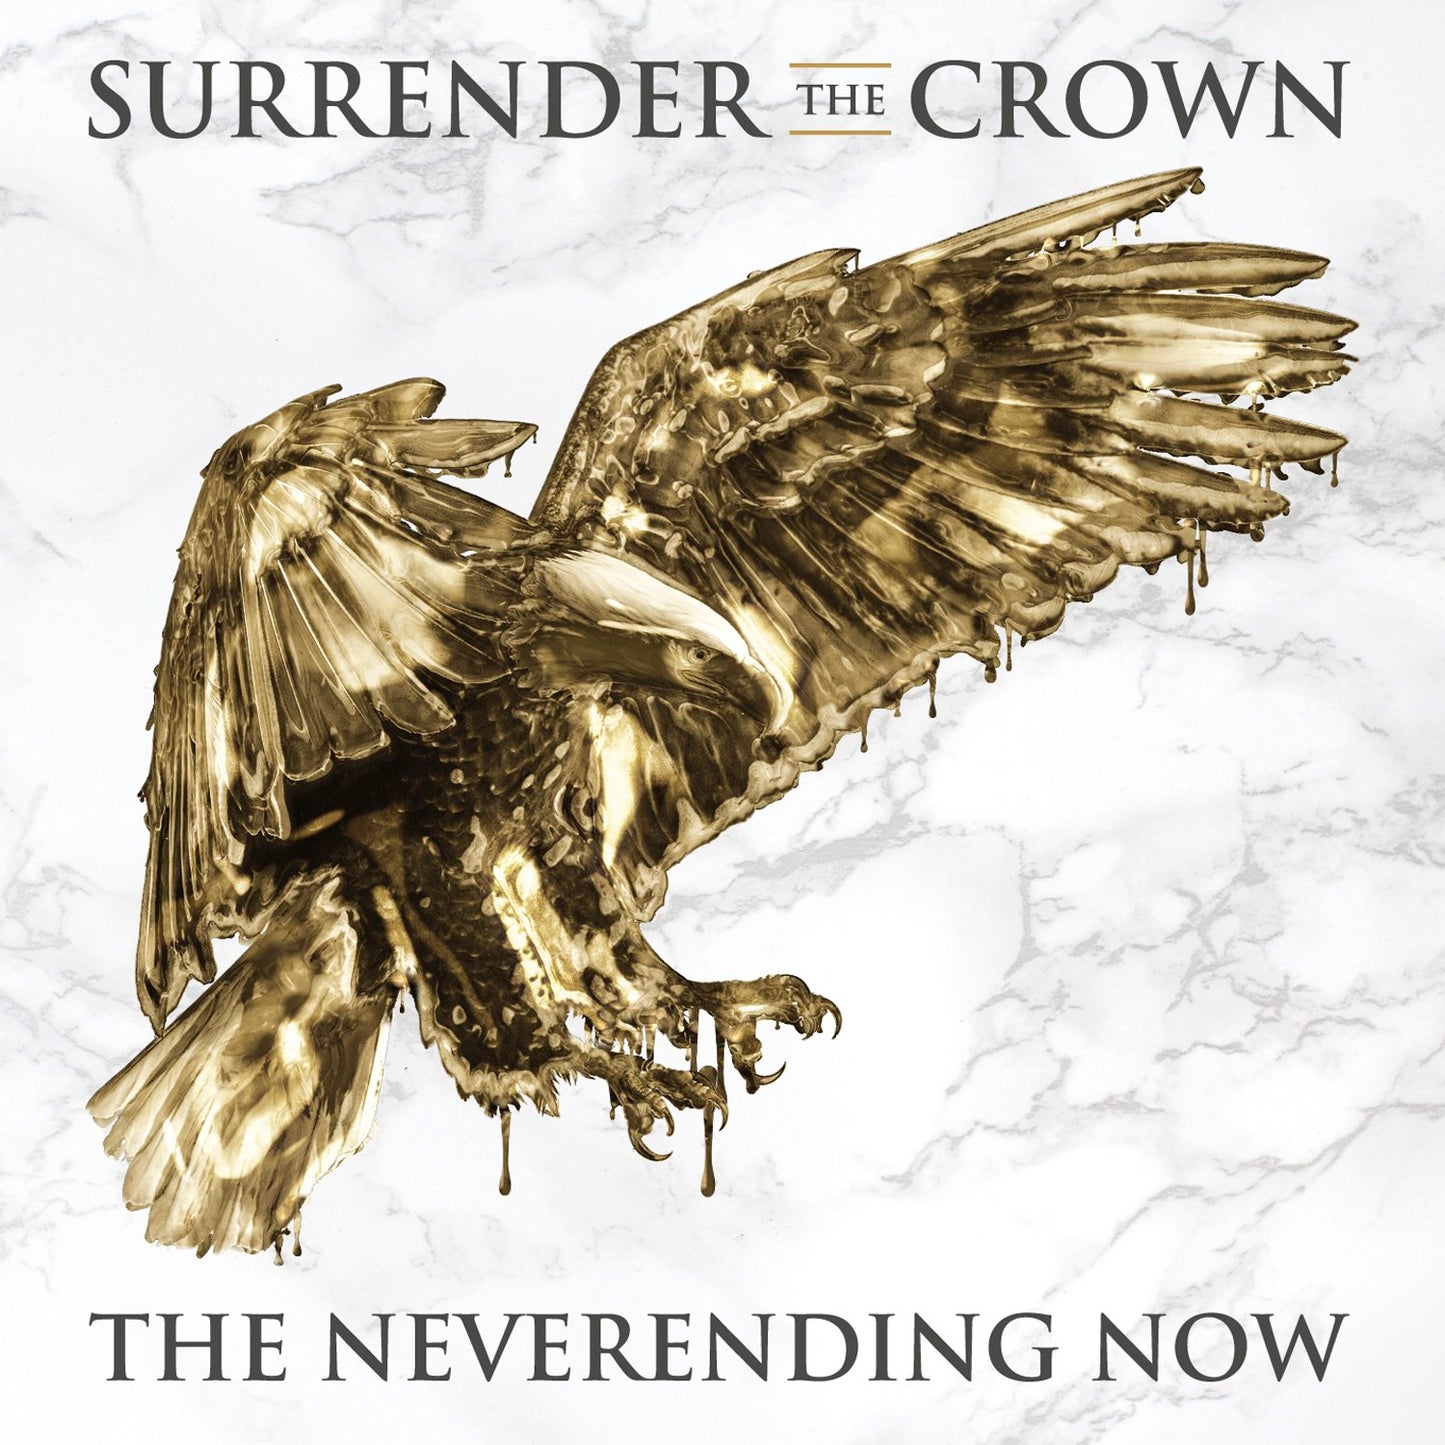 CD "The Neverending Now"